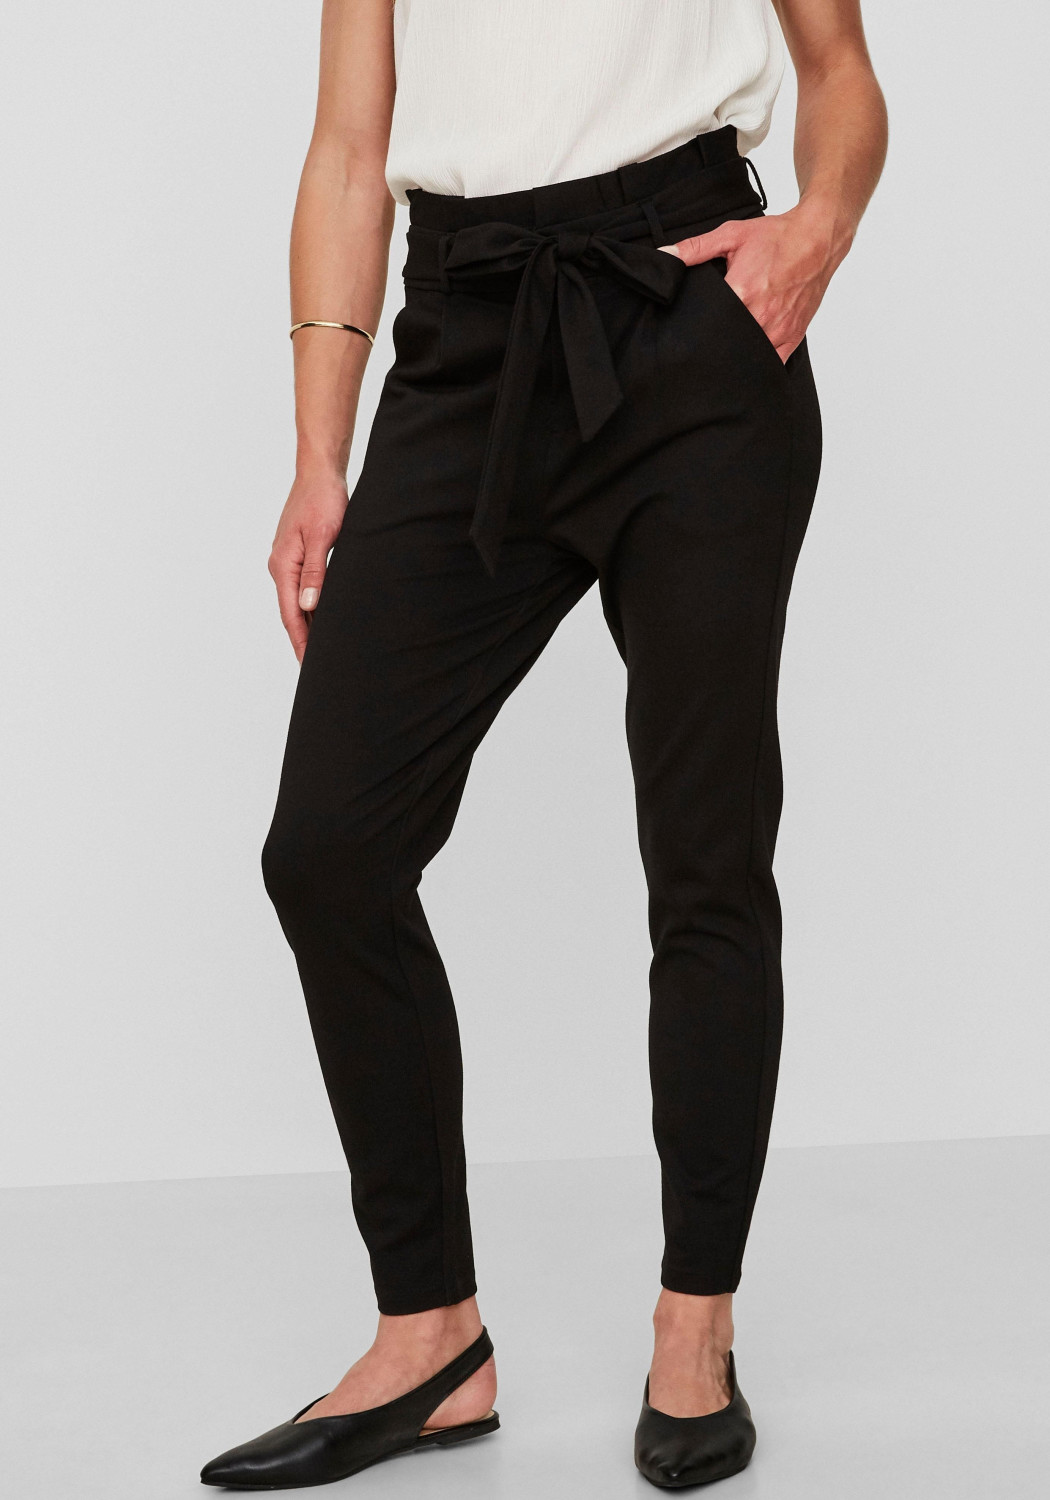 23,99 black Pants Vero Eva Fit Moda (10205932) € | Loose Preisvergleich ab bei